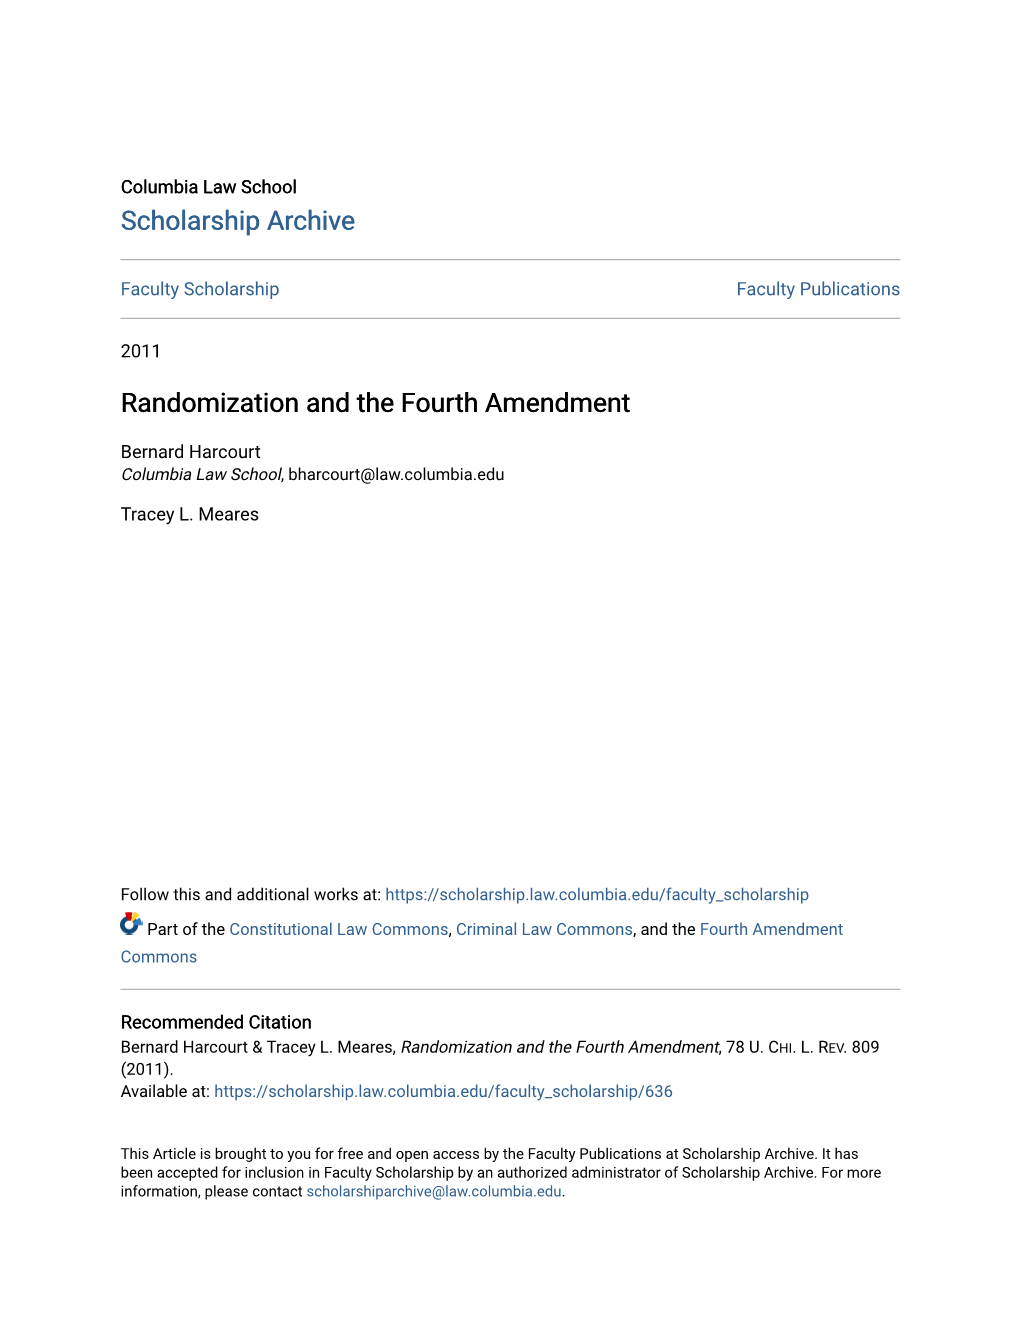 Randomization and the Fourth Amendment